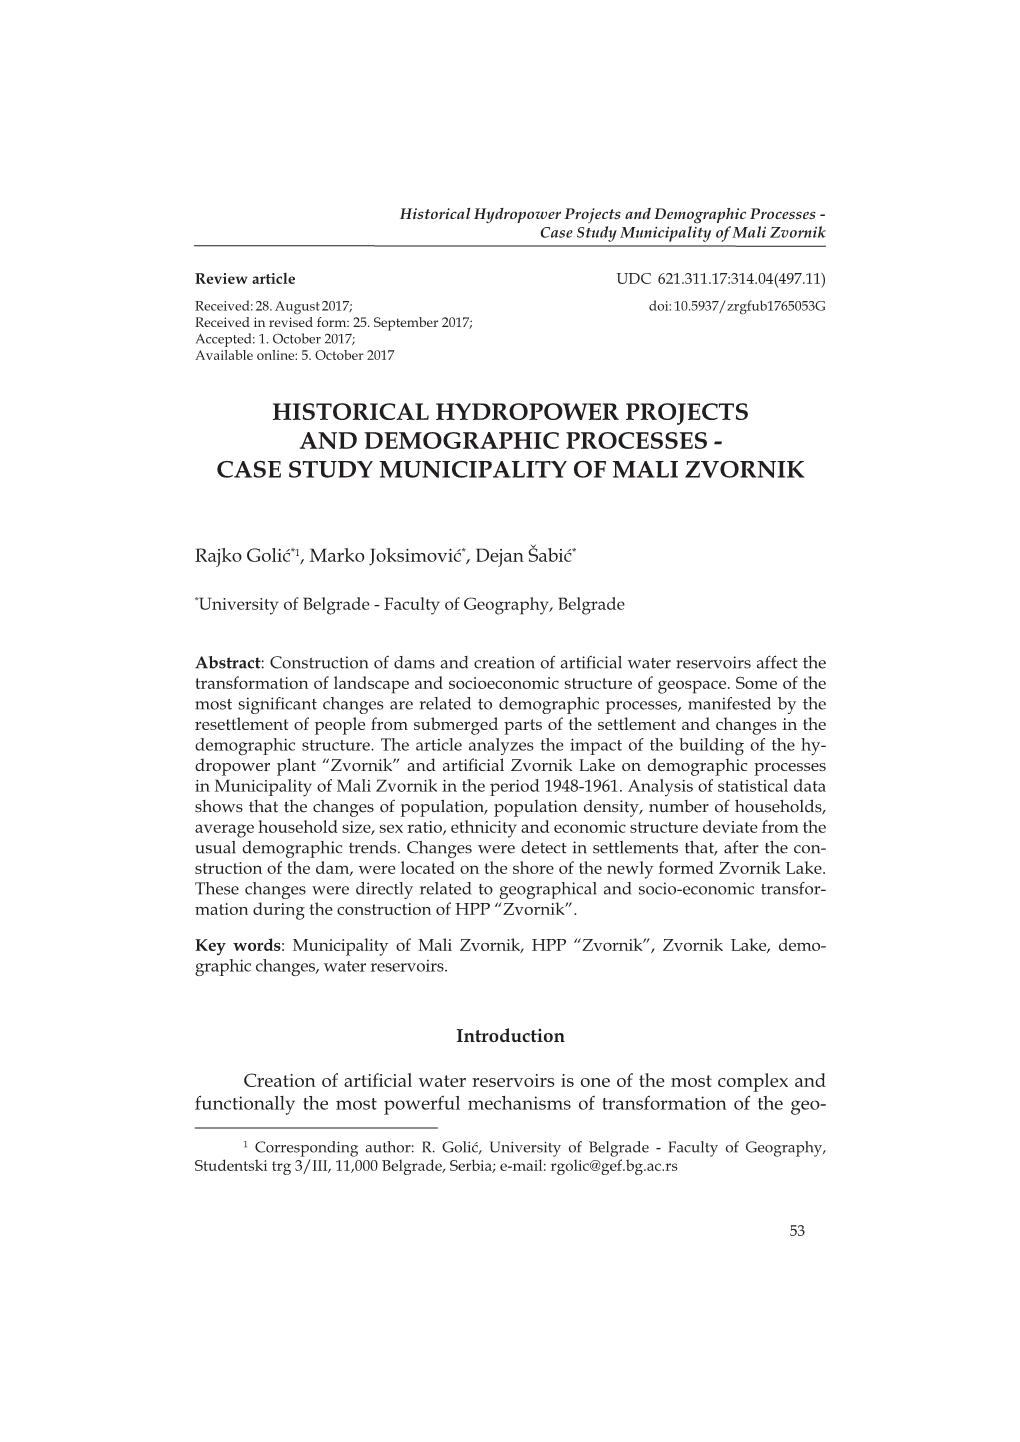 Historical Hydropower Projects and Demographic Processes - Case Study Municipality of Mali Zvornik